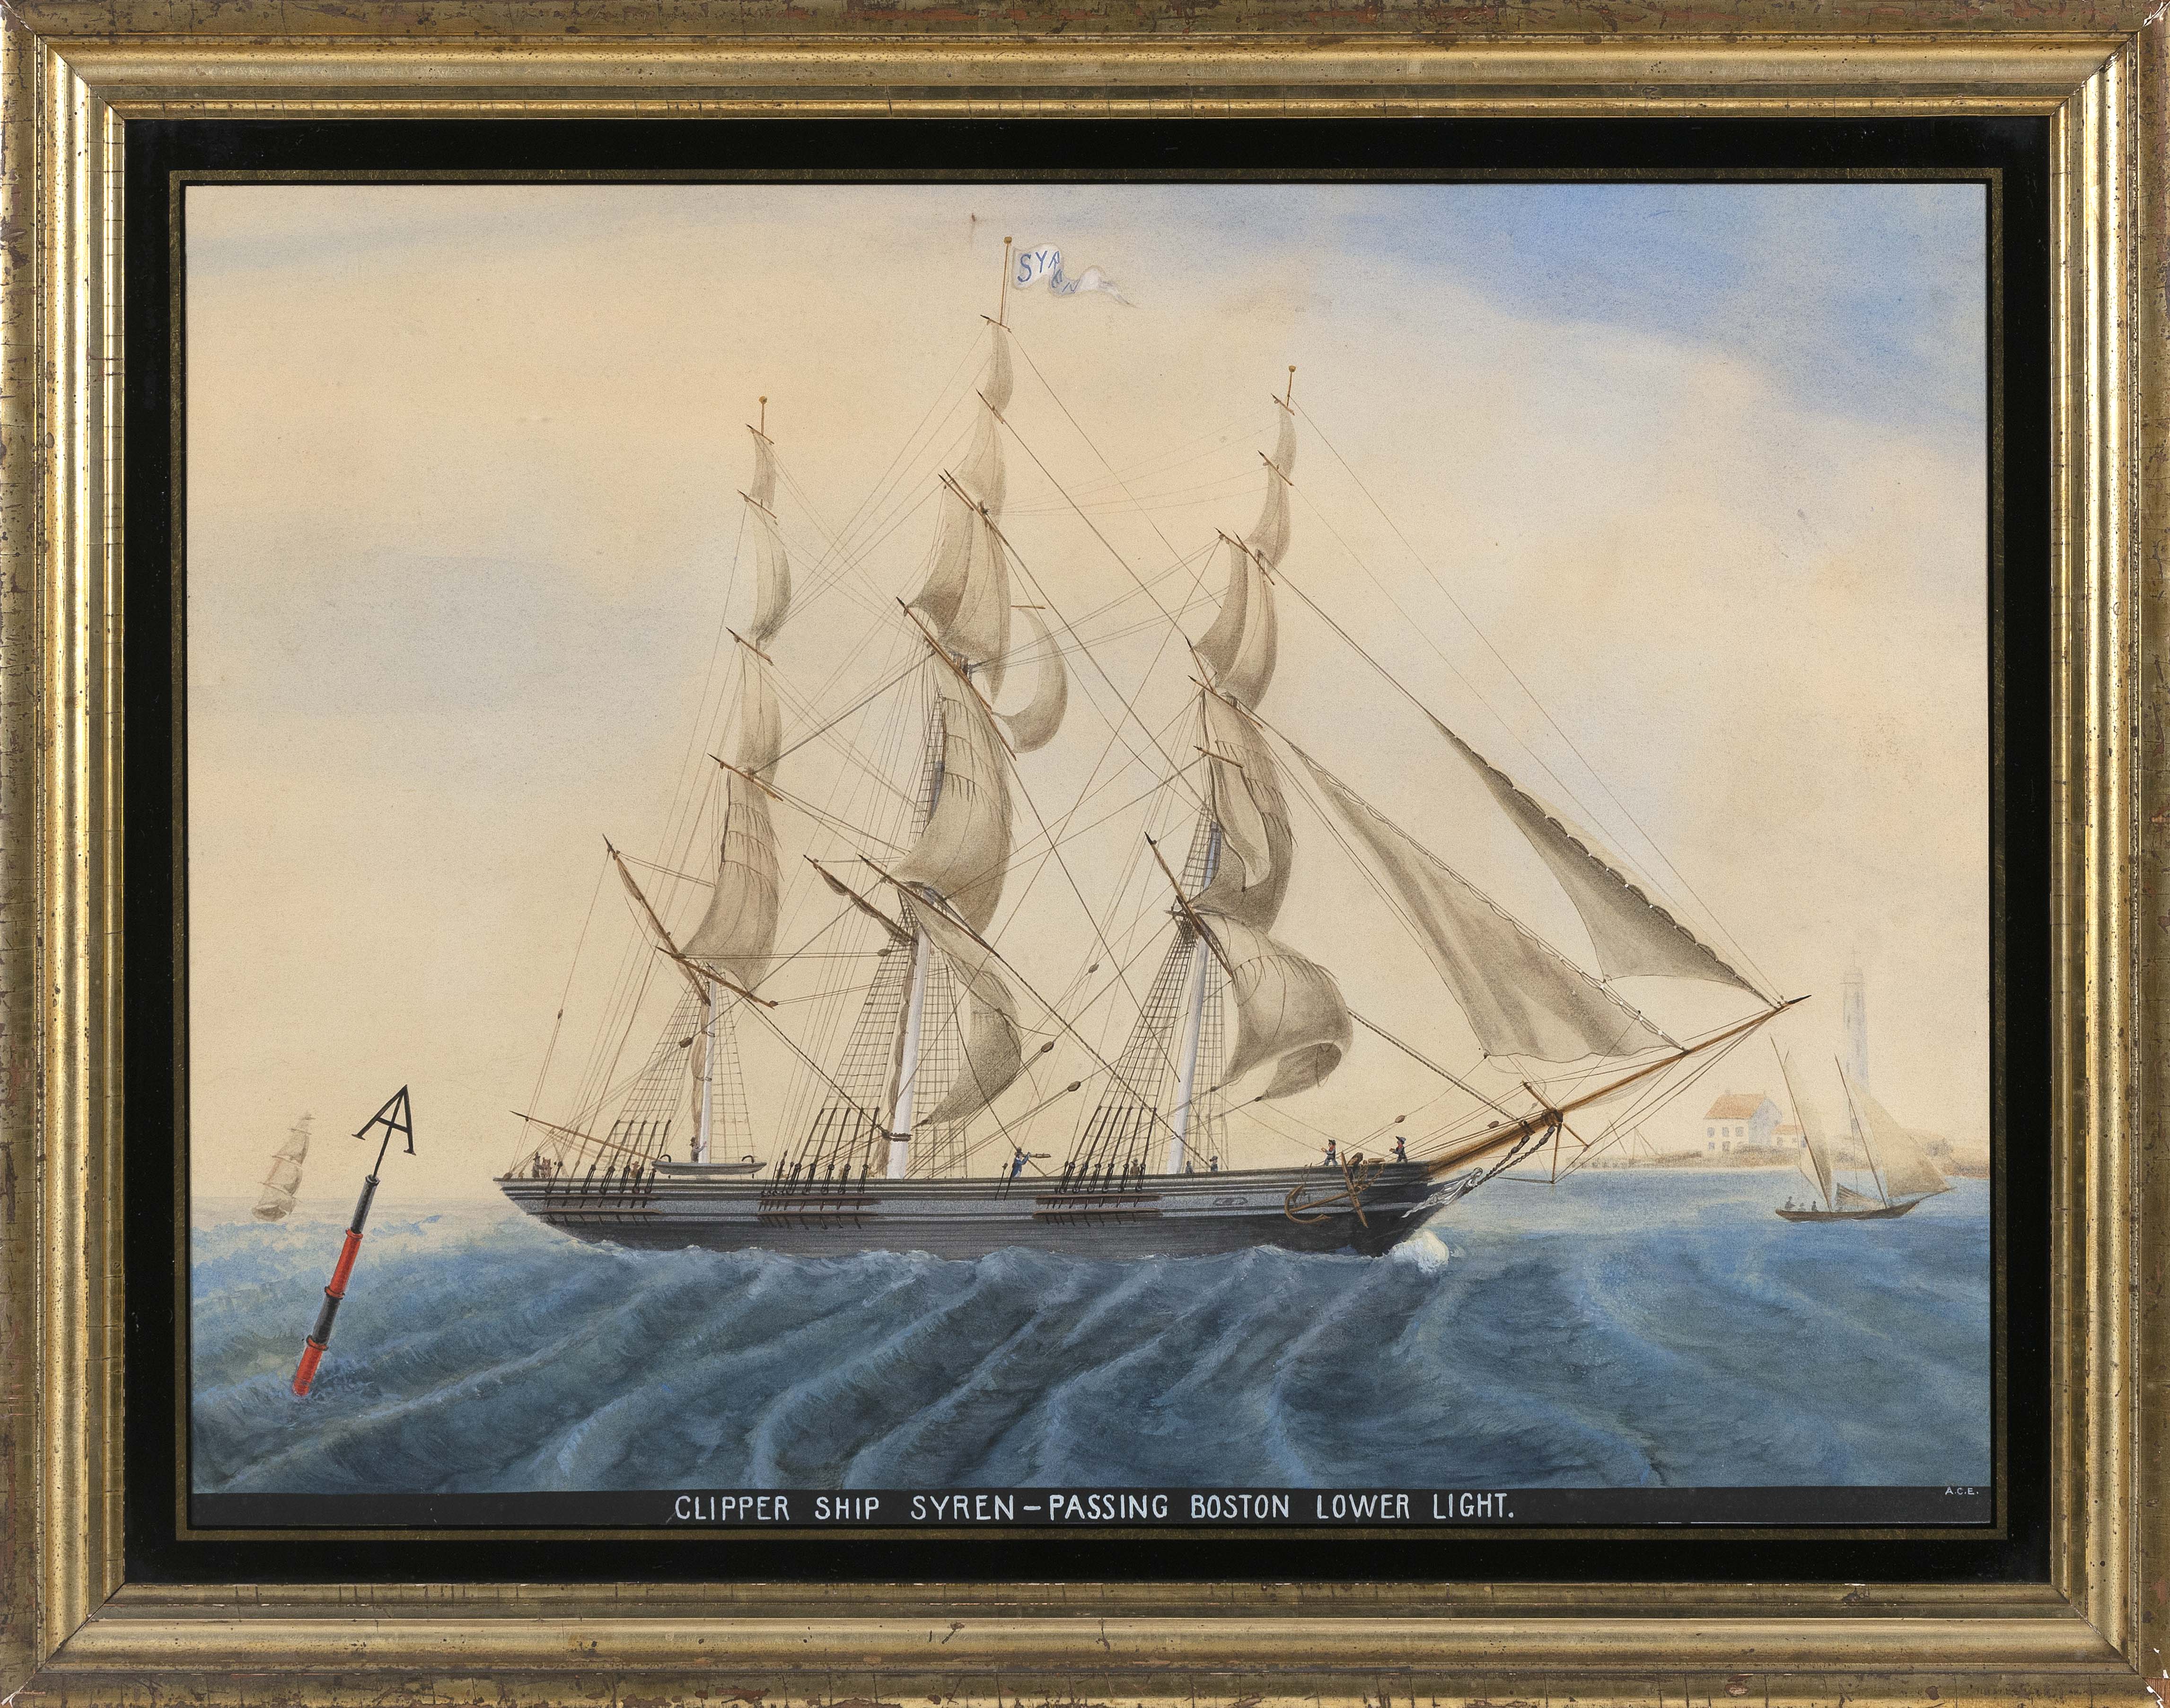 AMERICAN SCHOOL (19th Century,), “Clipper Ship Syren - Passing Boston Lower Light”., Watercolor, 17” x 23” sight. Framed 21.75” x 27.75”.